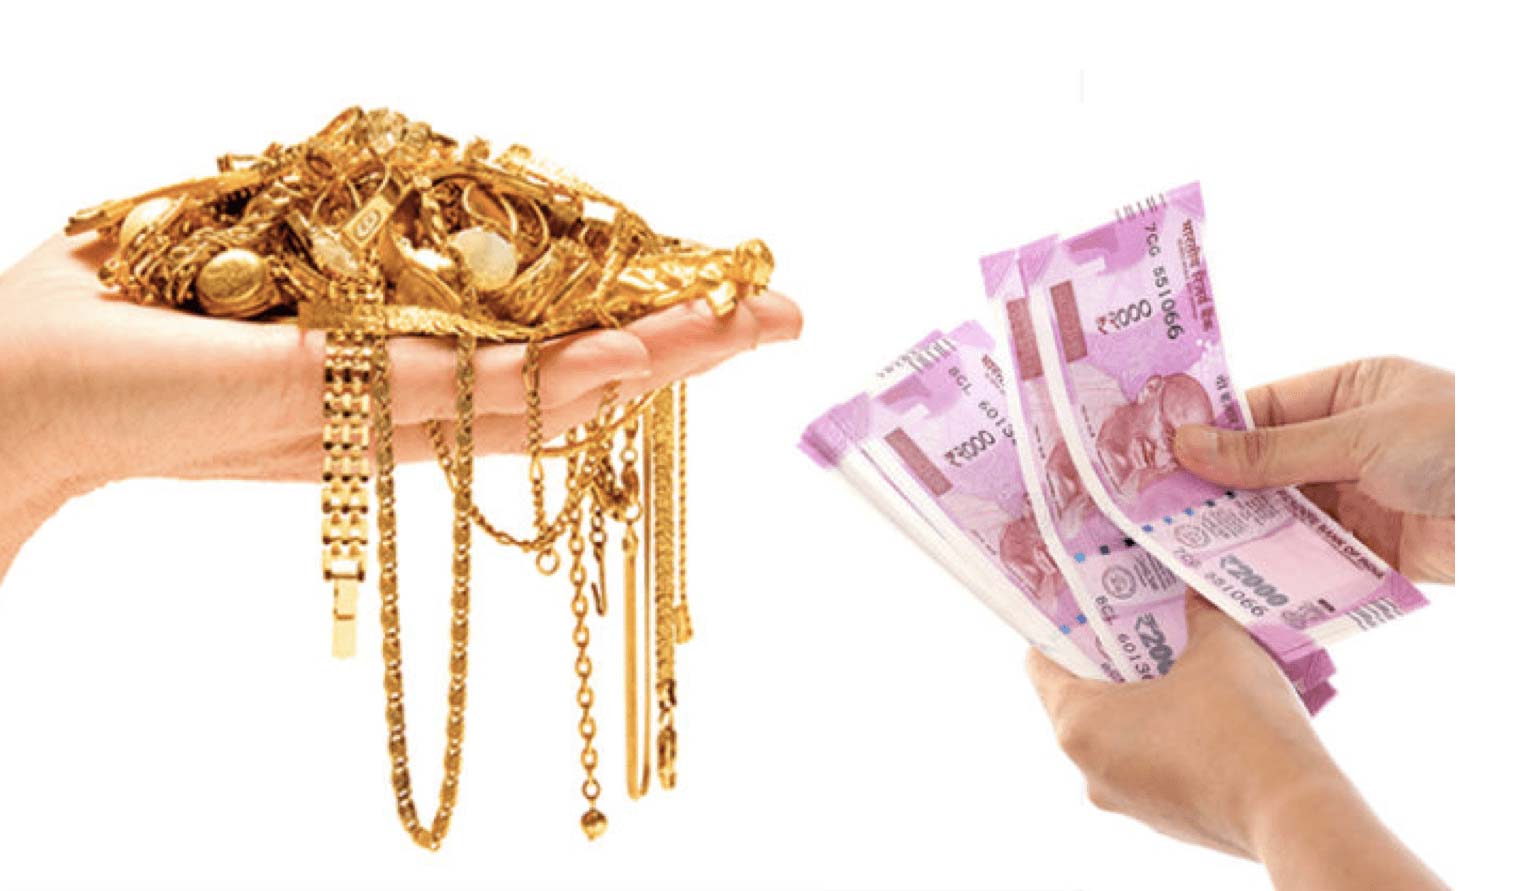 gold buyer in chandigarh, second hand gold buyer in chandigarh Sell gold in Chandigarh, Cash for Gold in Chandigarh, Sell Gold for Cash in Chandigarh